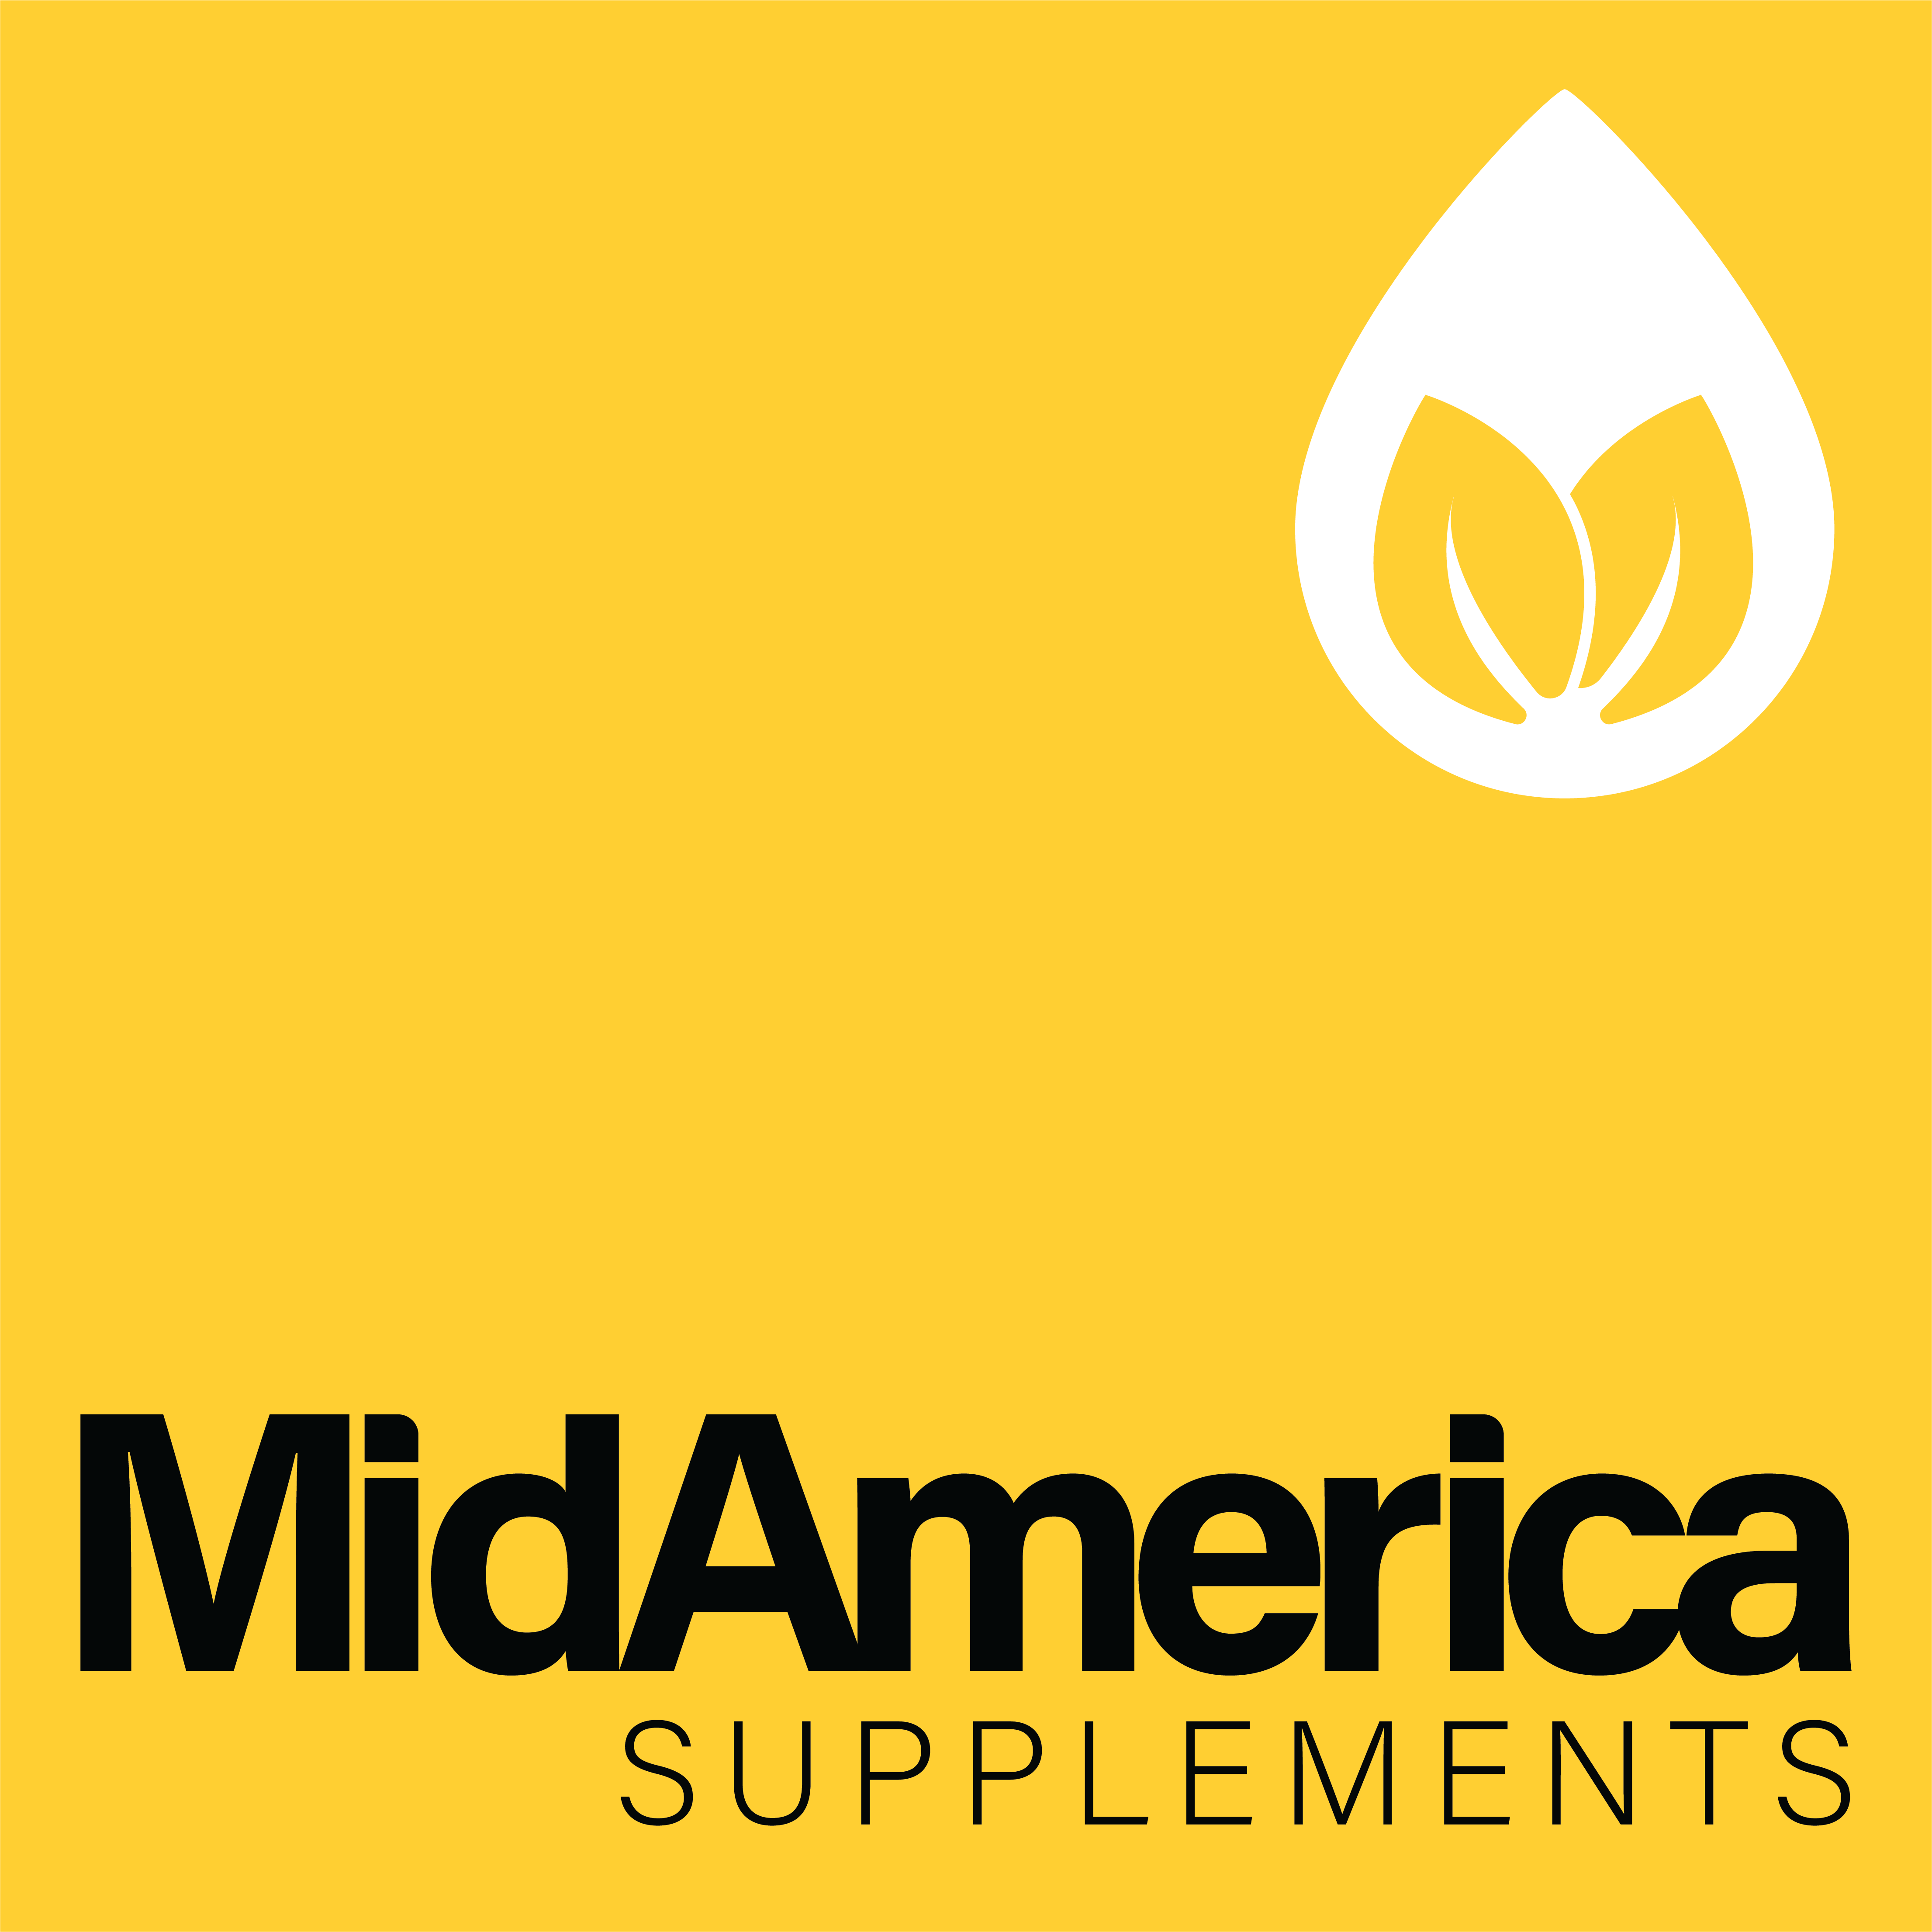 Mid America Supplements